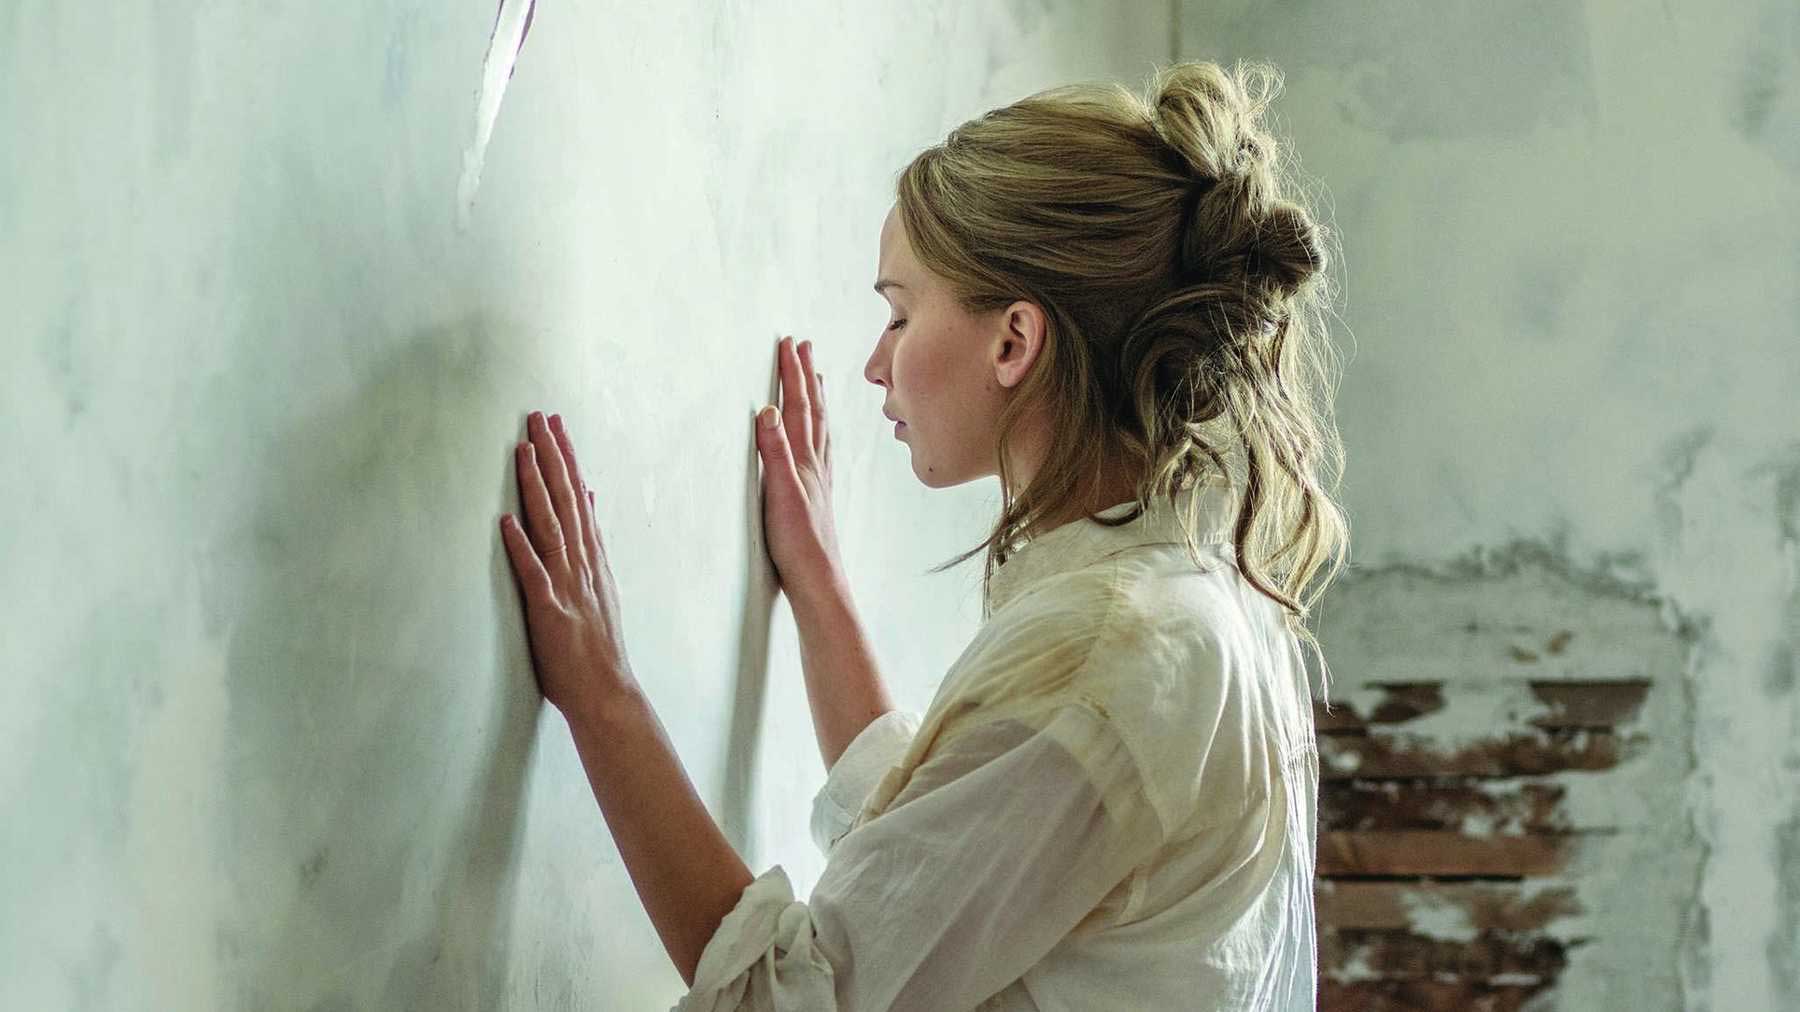 جنیفر لارنس در فیلم مادر! دارن آرونوفسکی مقابل دیوار سفید رنگ خورده